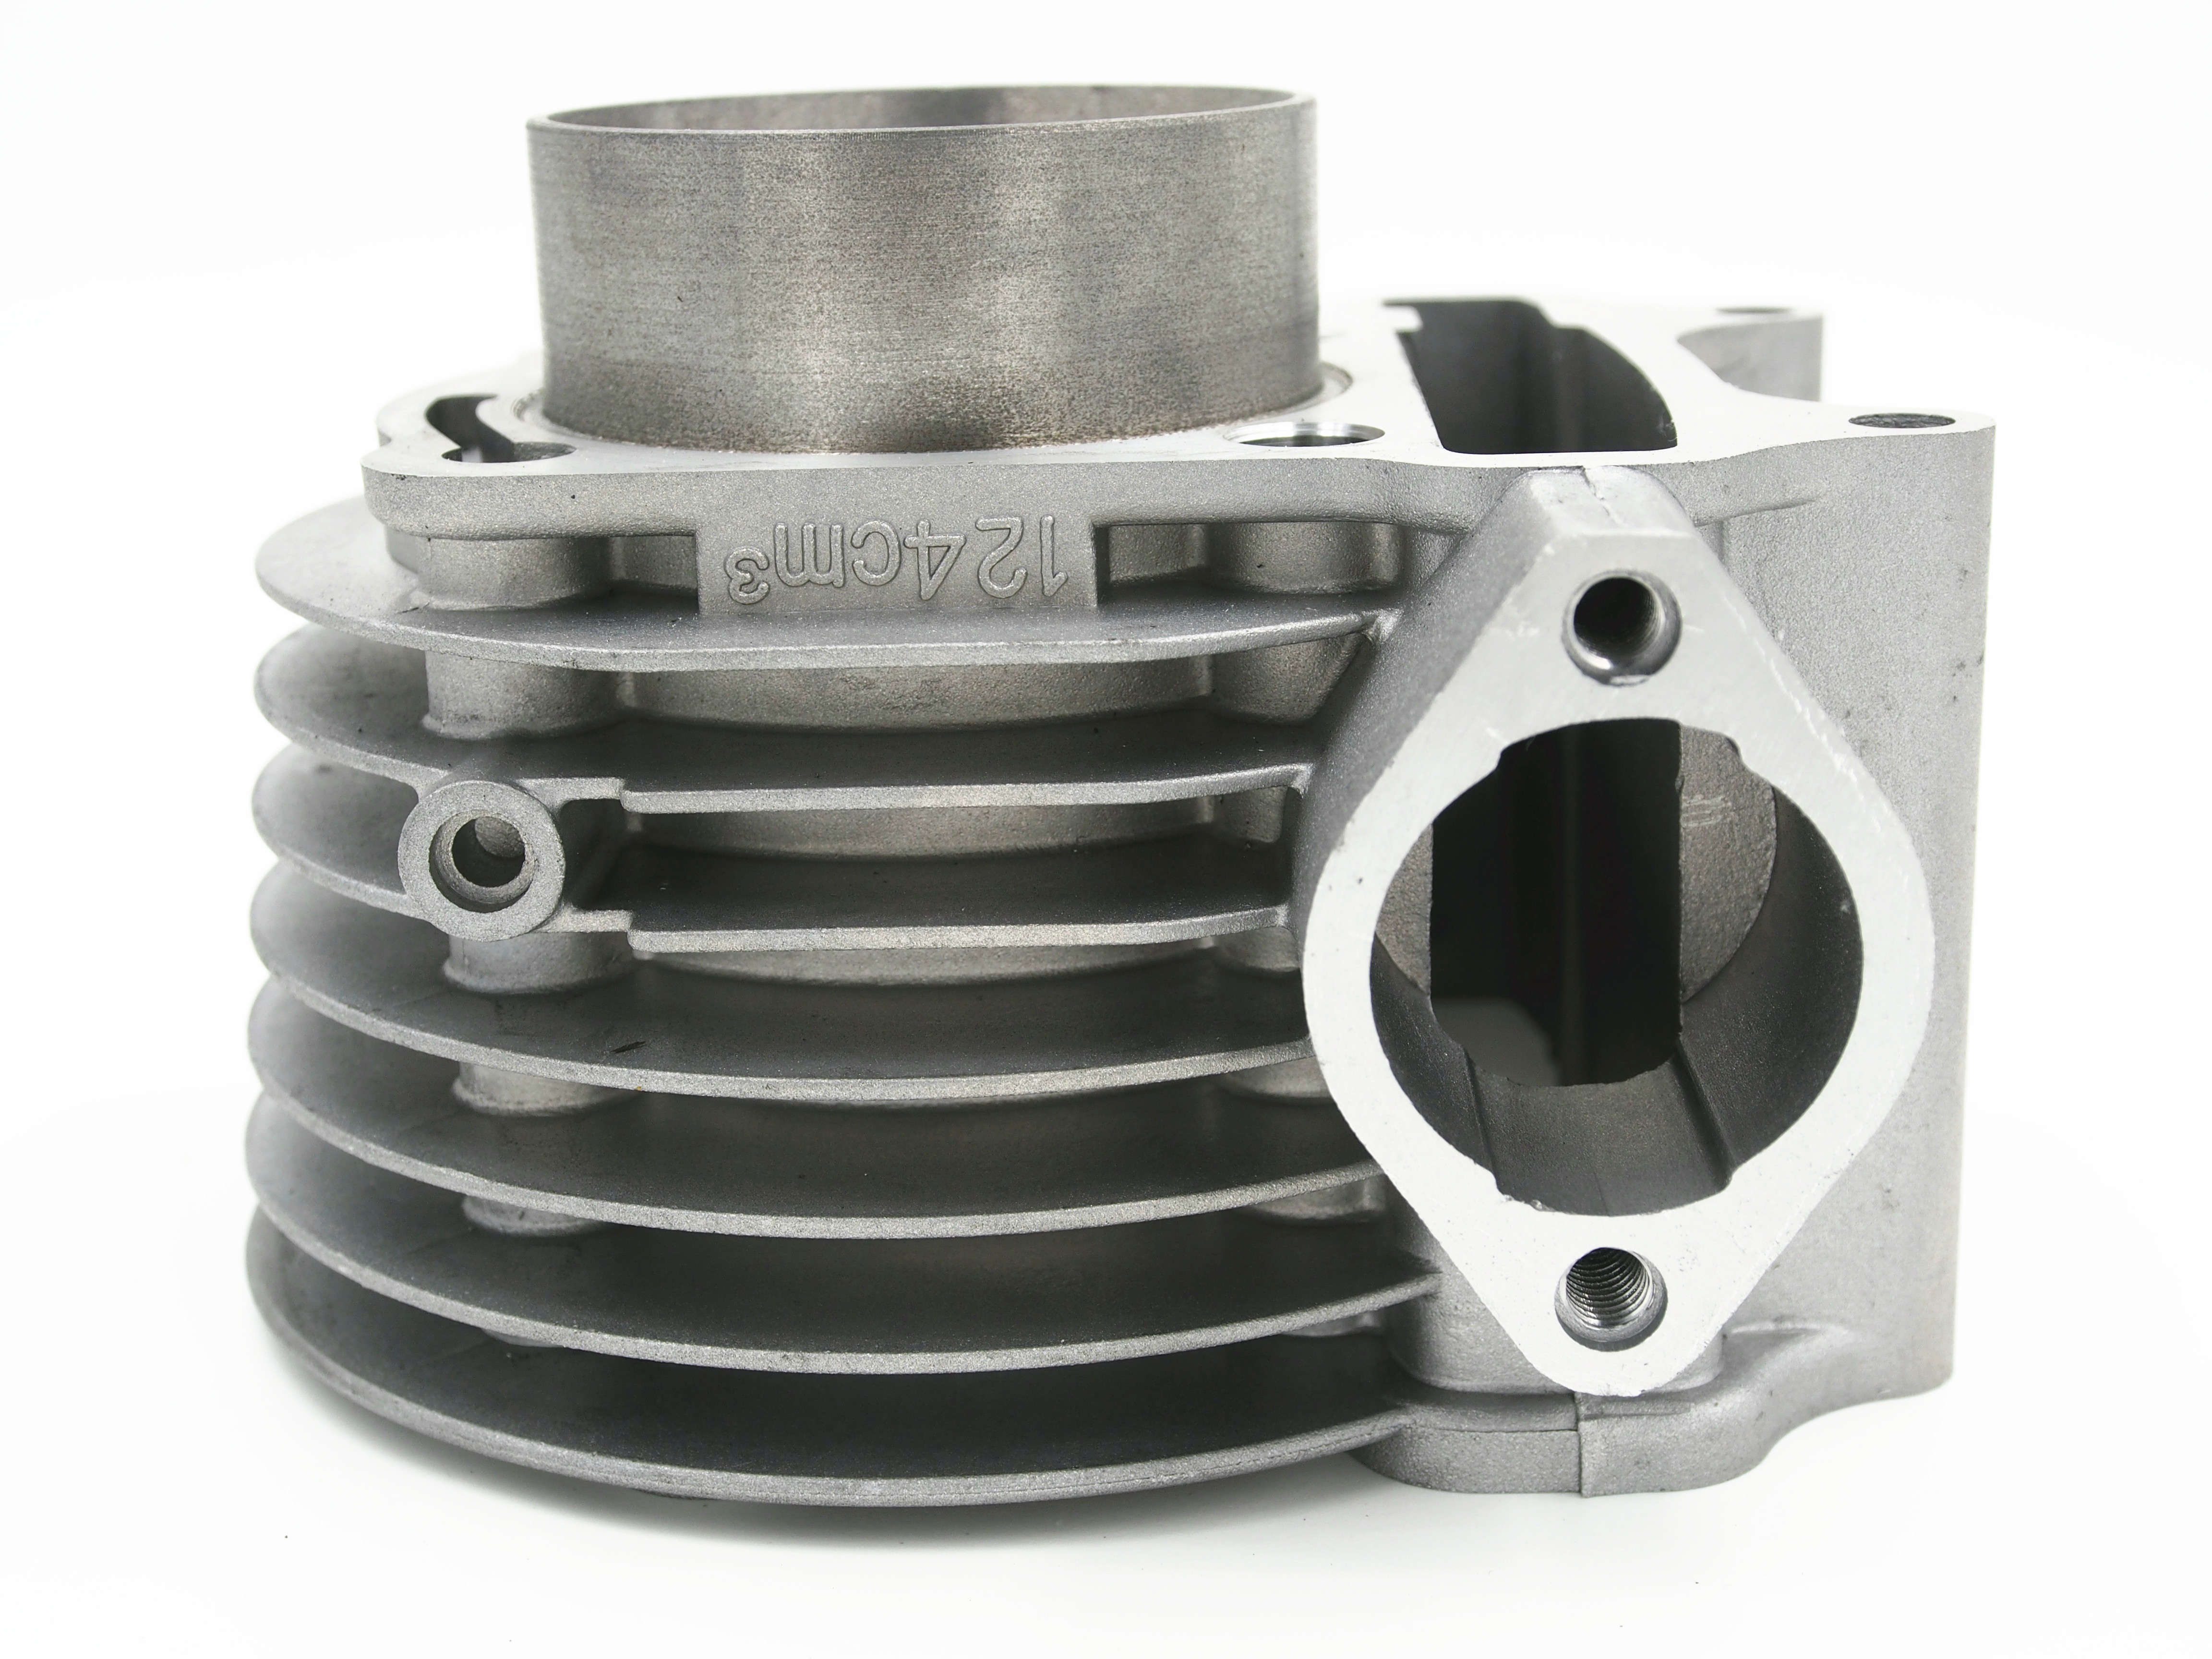 Oem 124cc Single Cylinder Engine Block , Motorcycle Air Cooled Cylinder